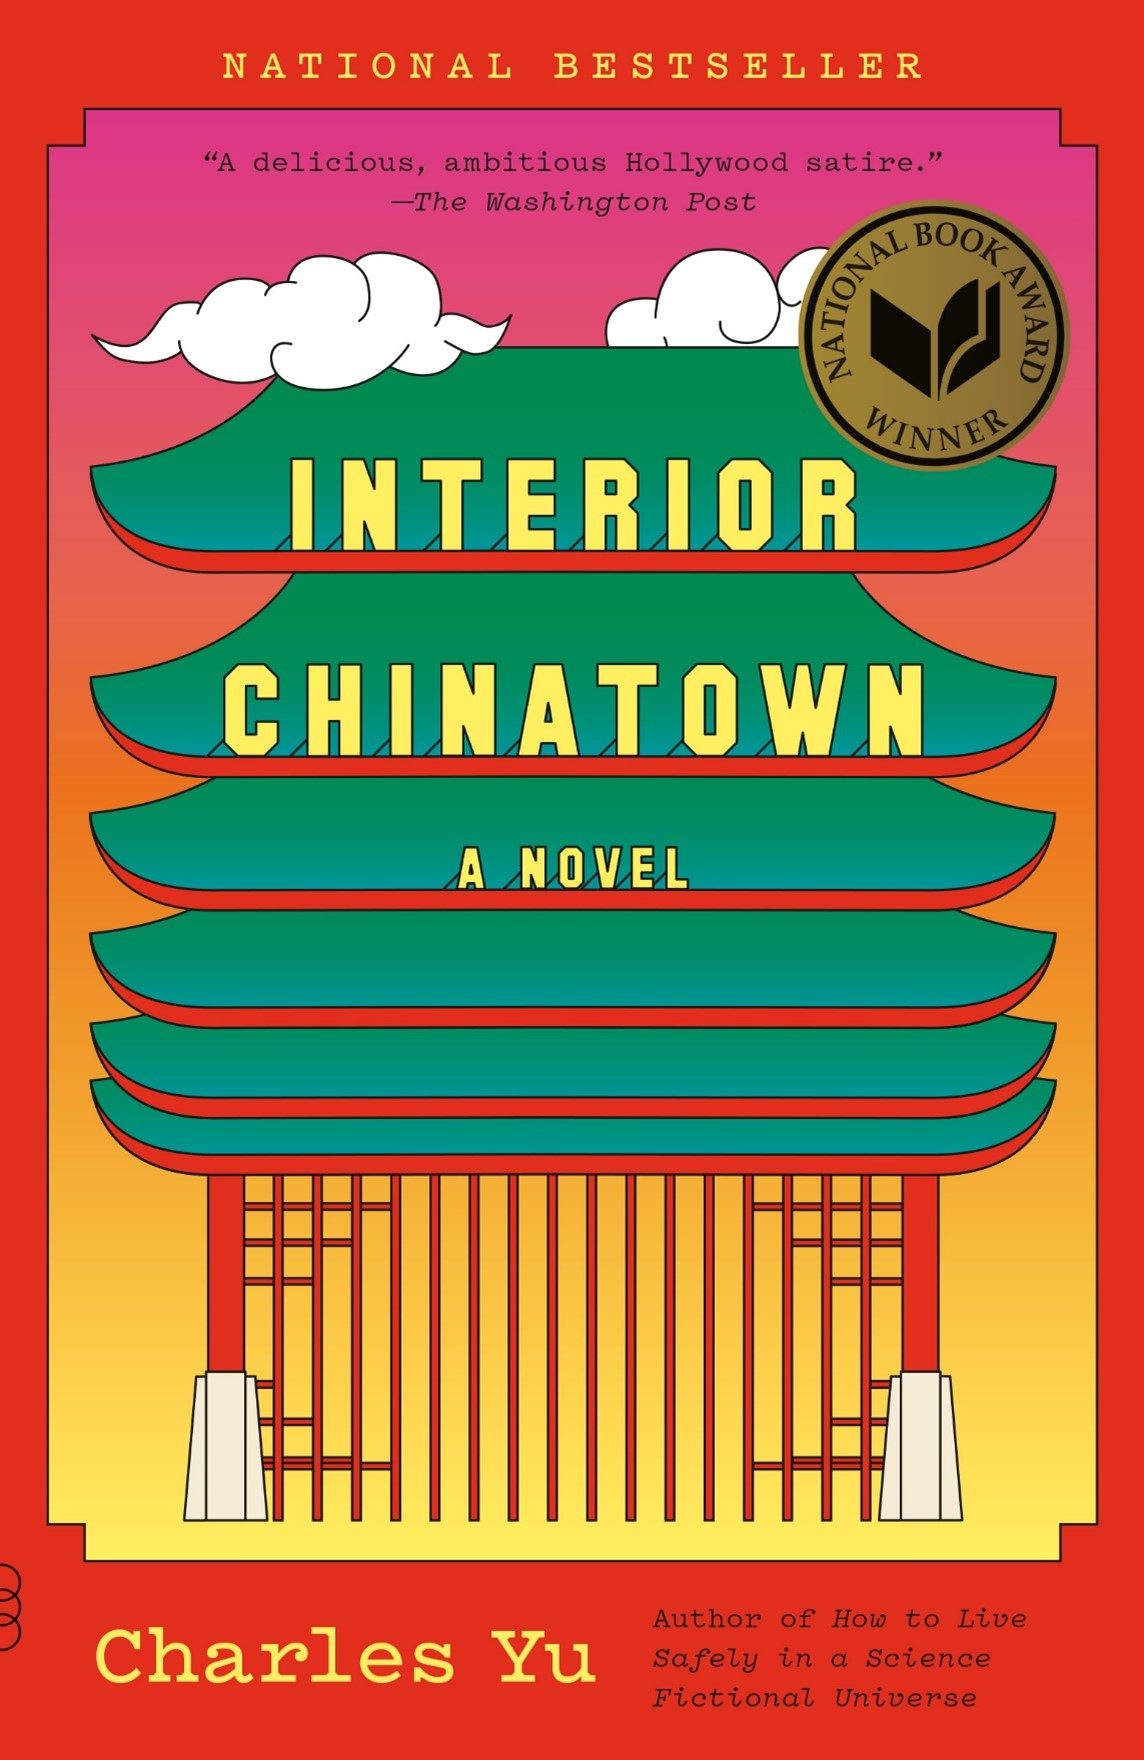 Book Title: Interior Chinatown